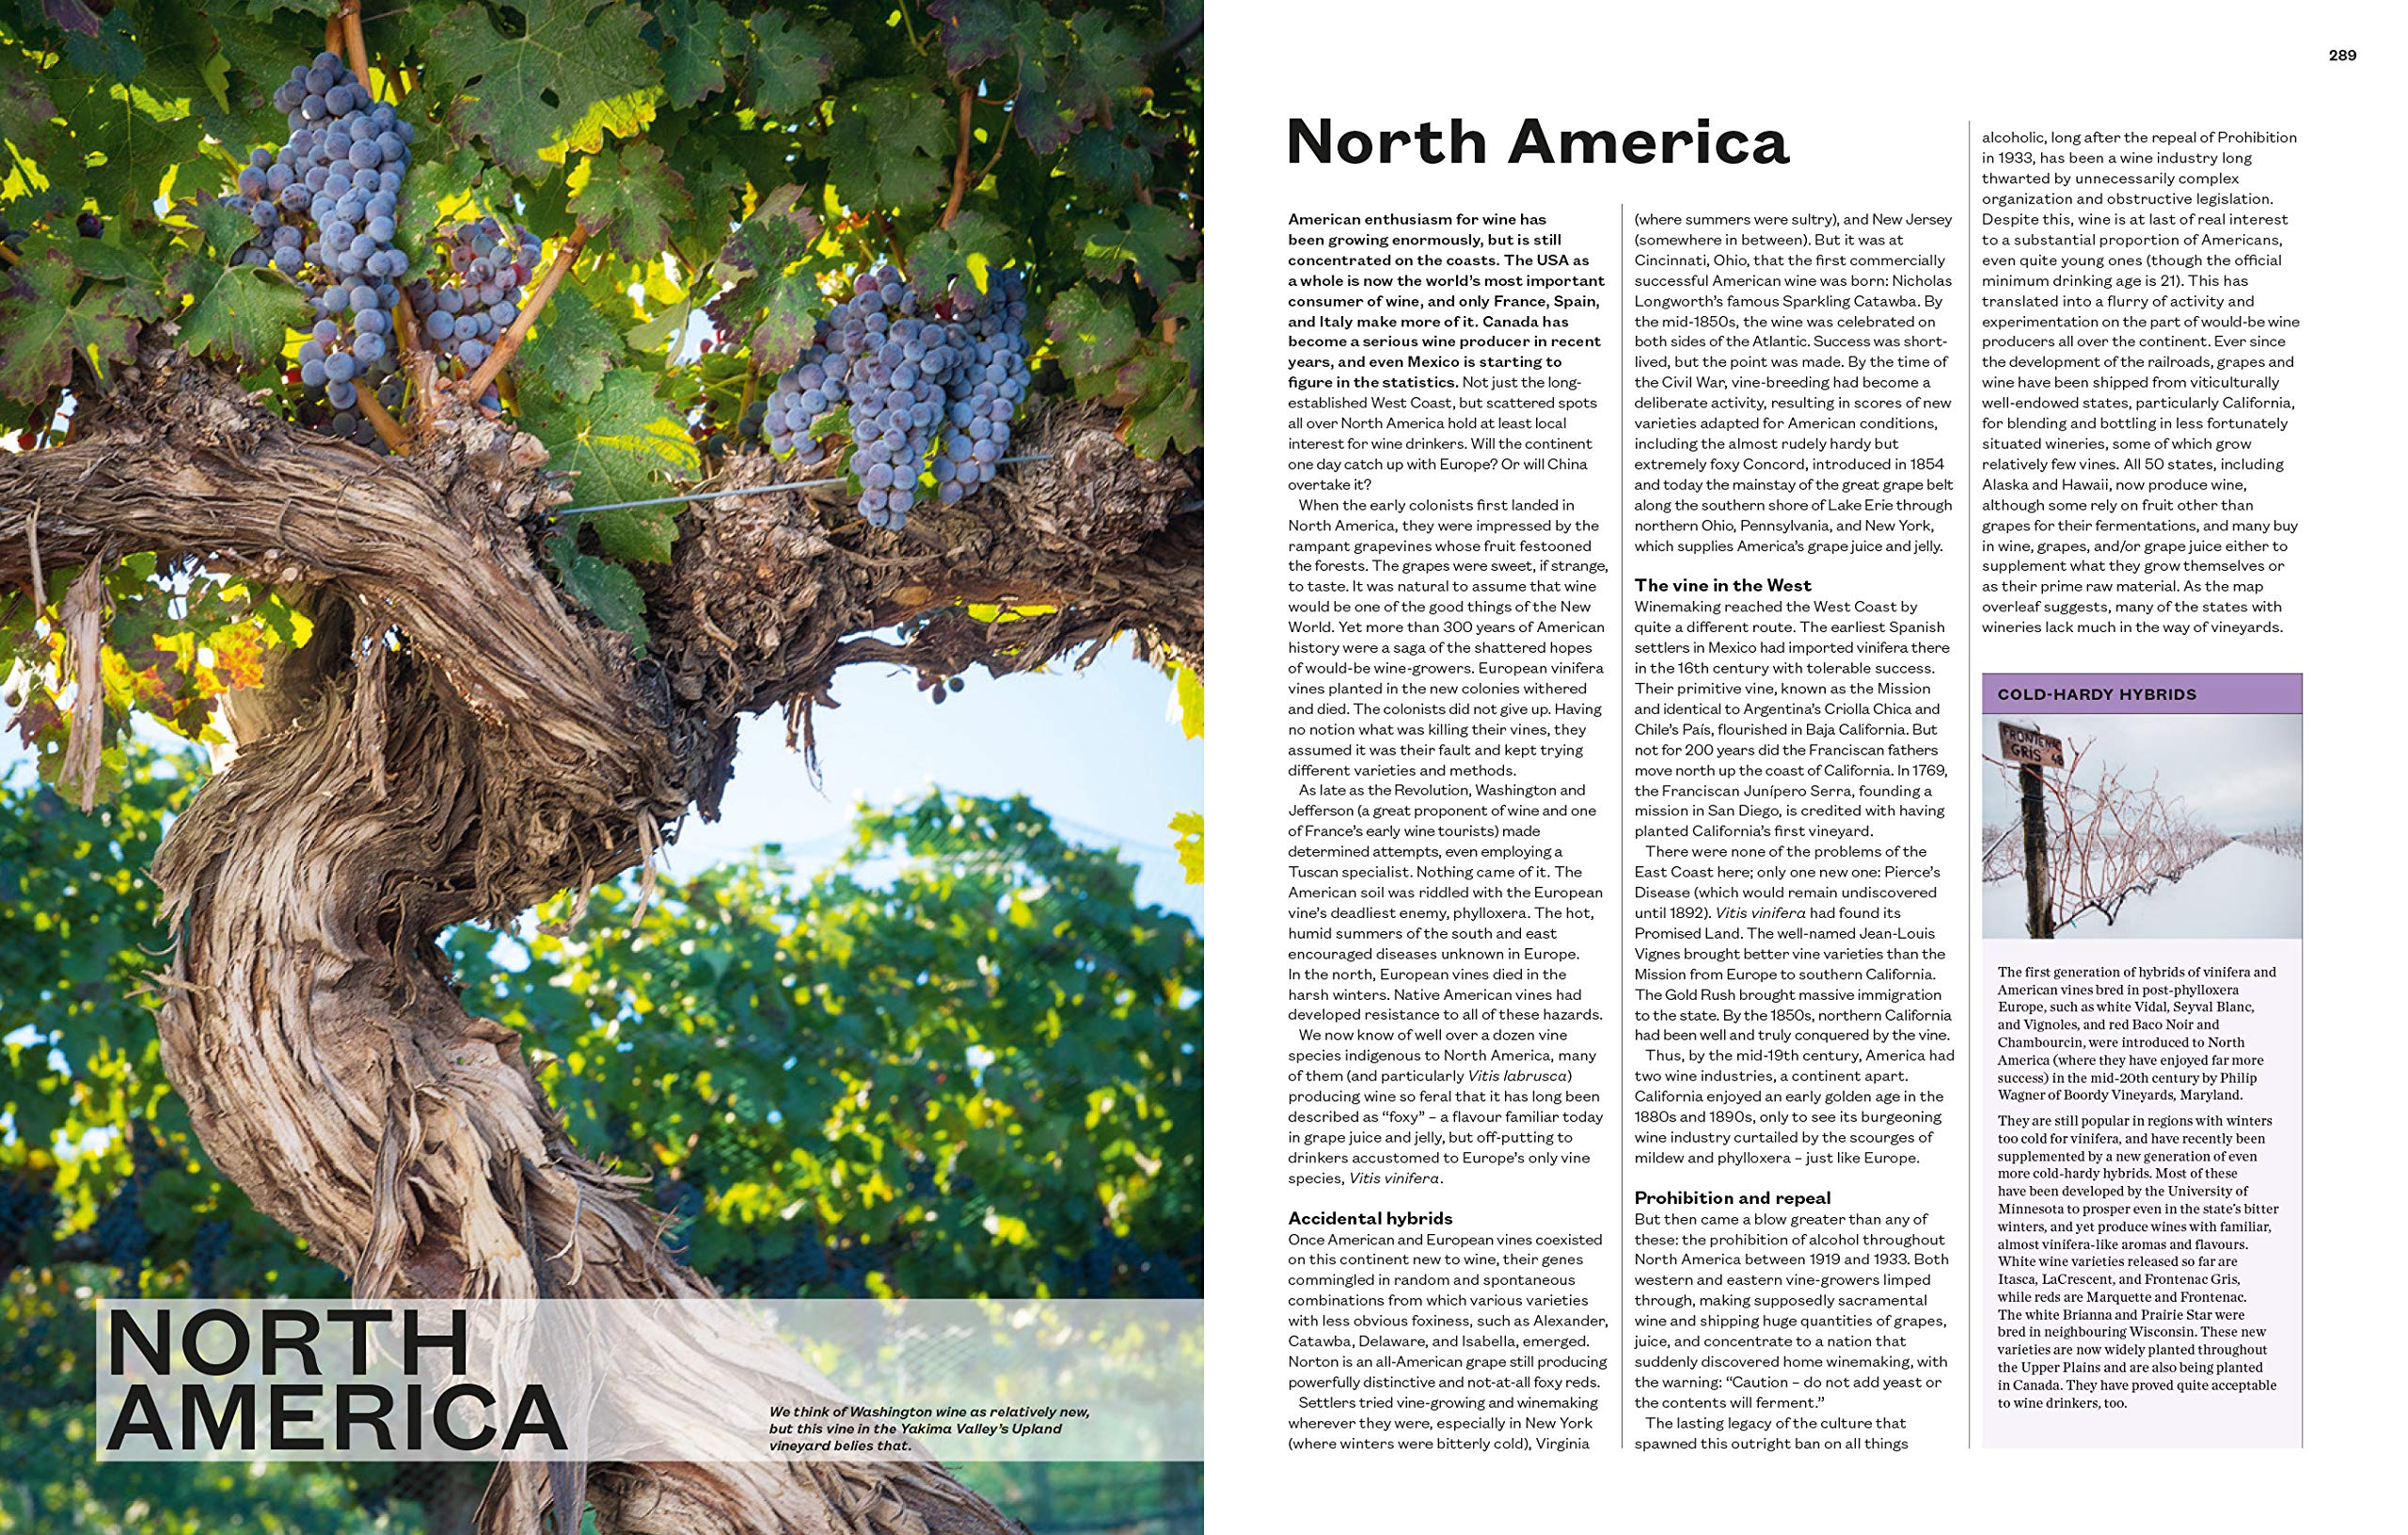 The World Atlas of Wine 8th Edition (Hugh Johnson, Jancis Robinson)